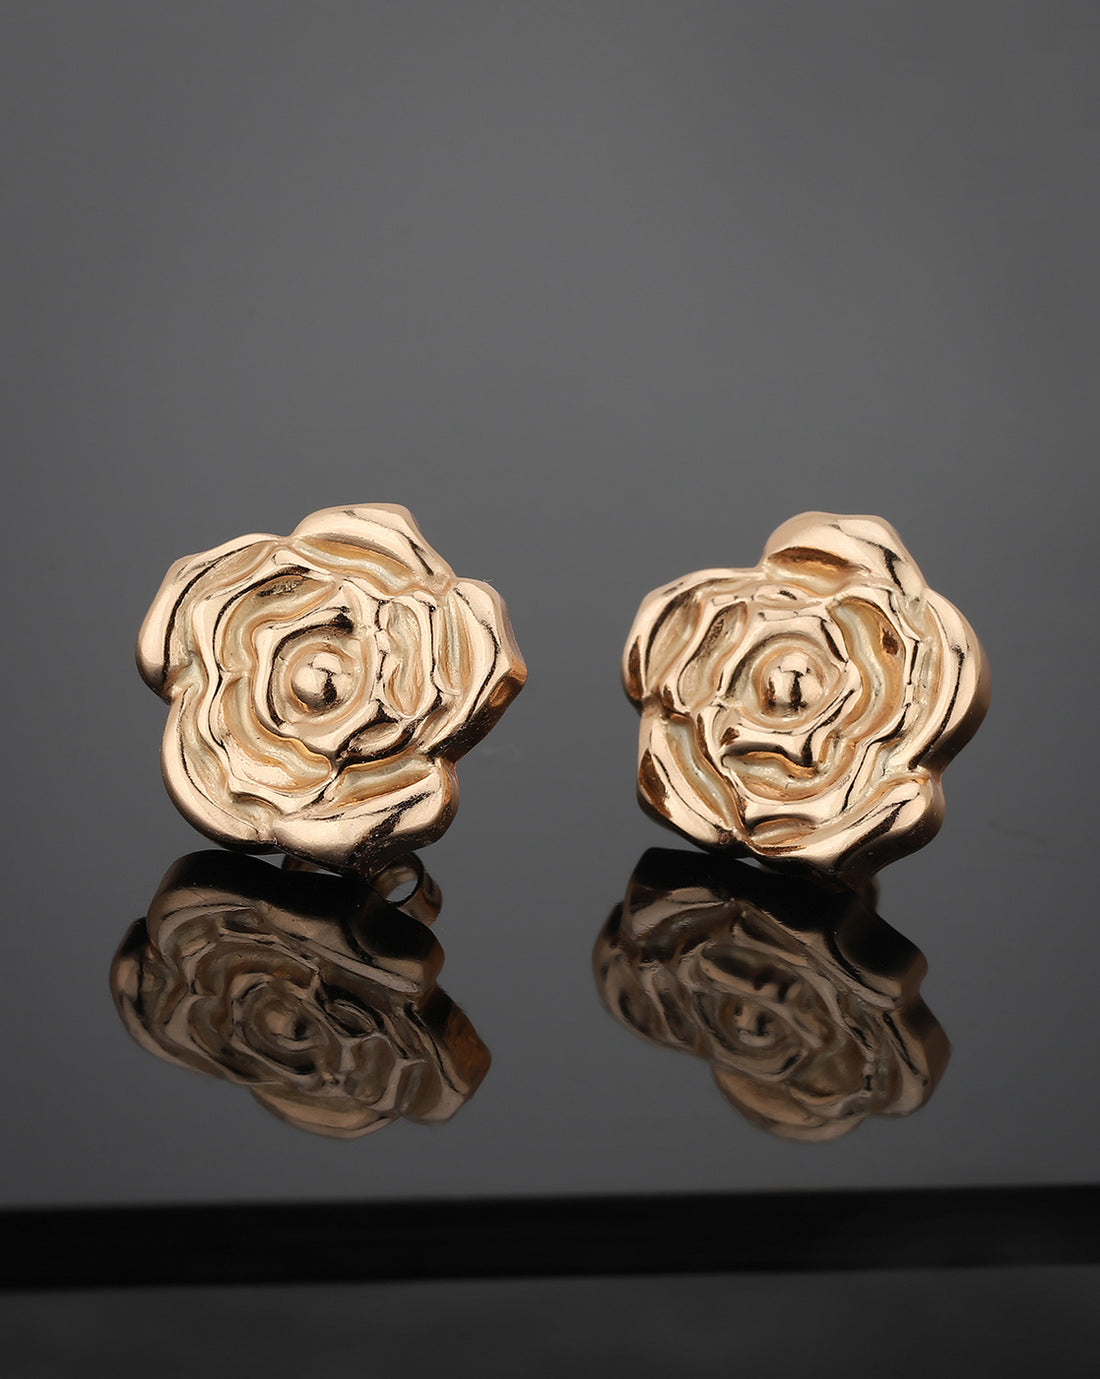 Carlton London 925 Sterling Silver Rose Gold Plated Rose Stud Earring For Women